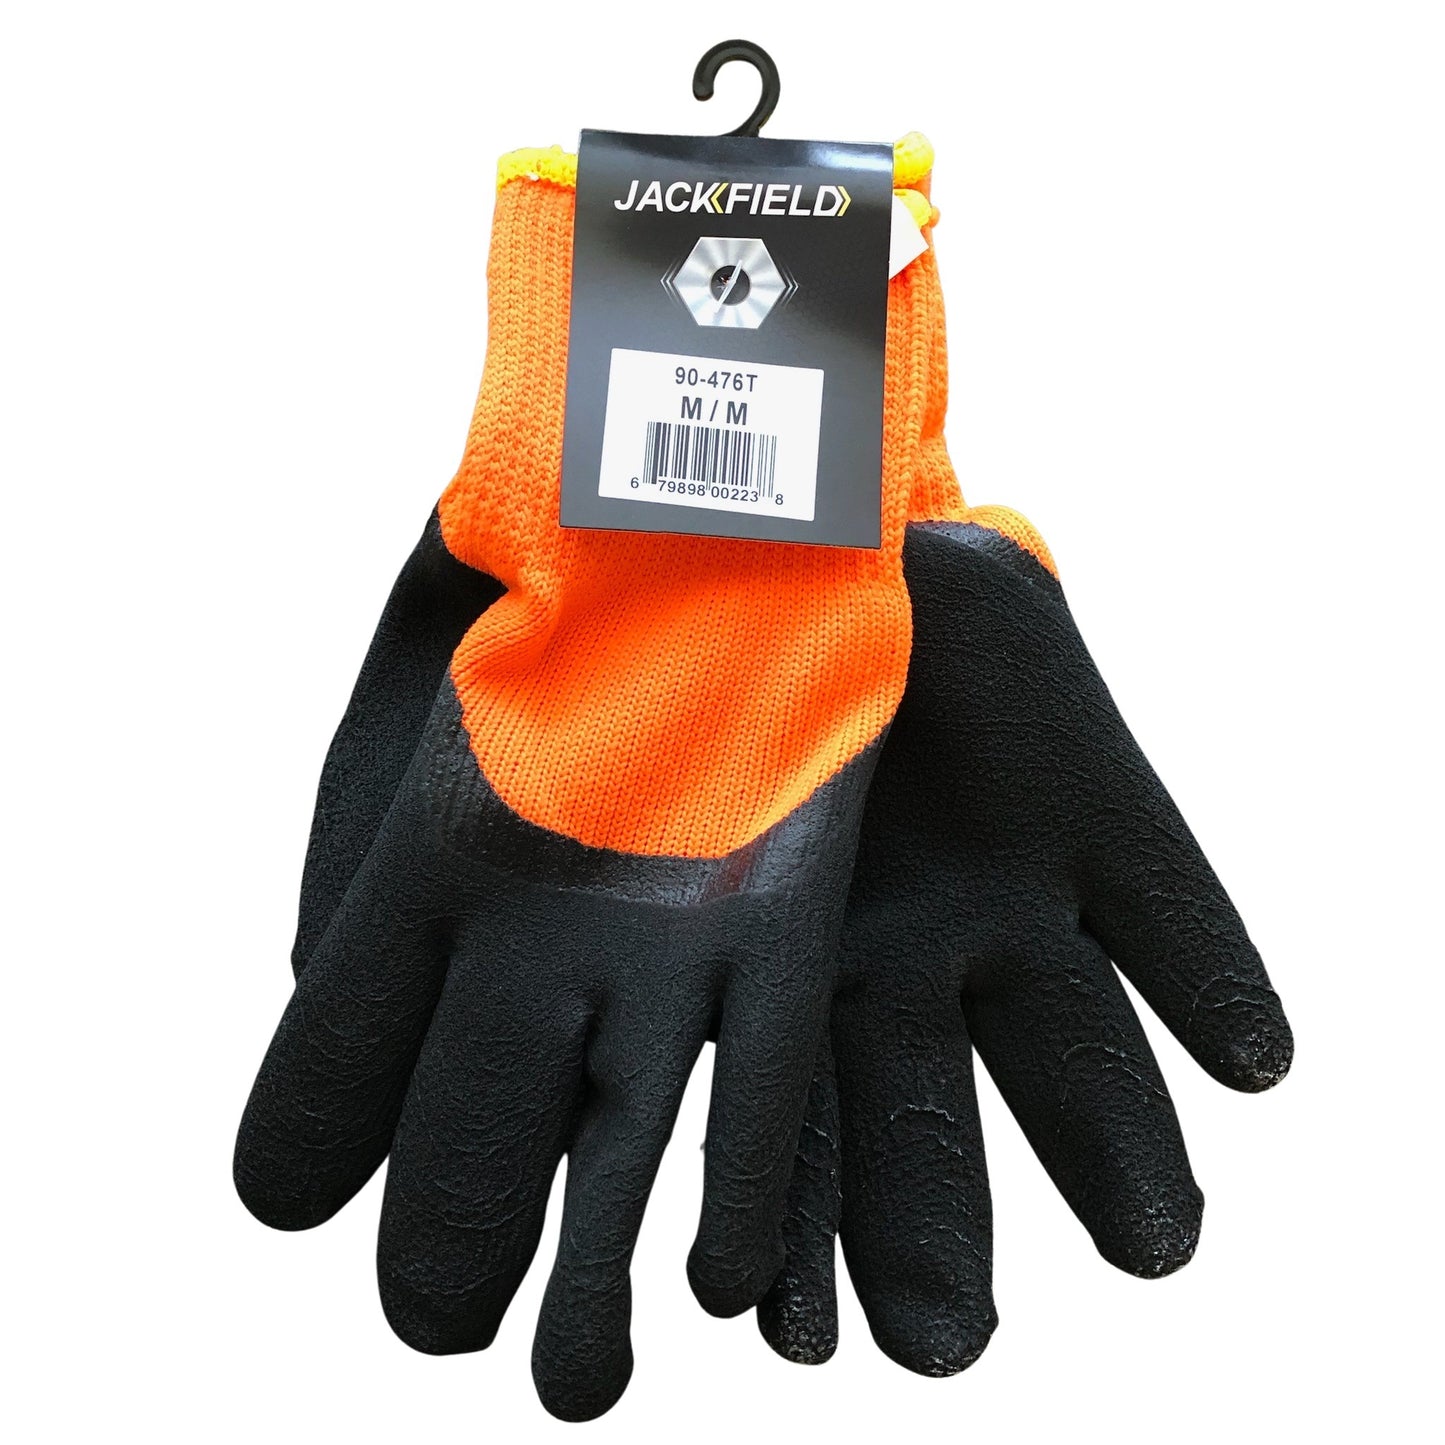 Jackfield 476 Latex Palm Glove Orange/Black Medium